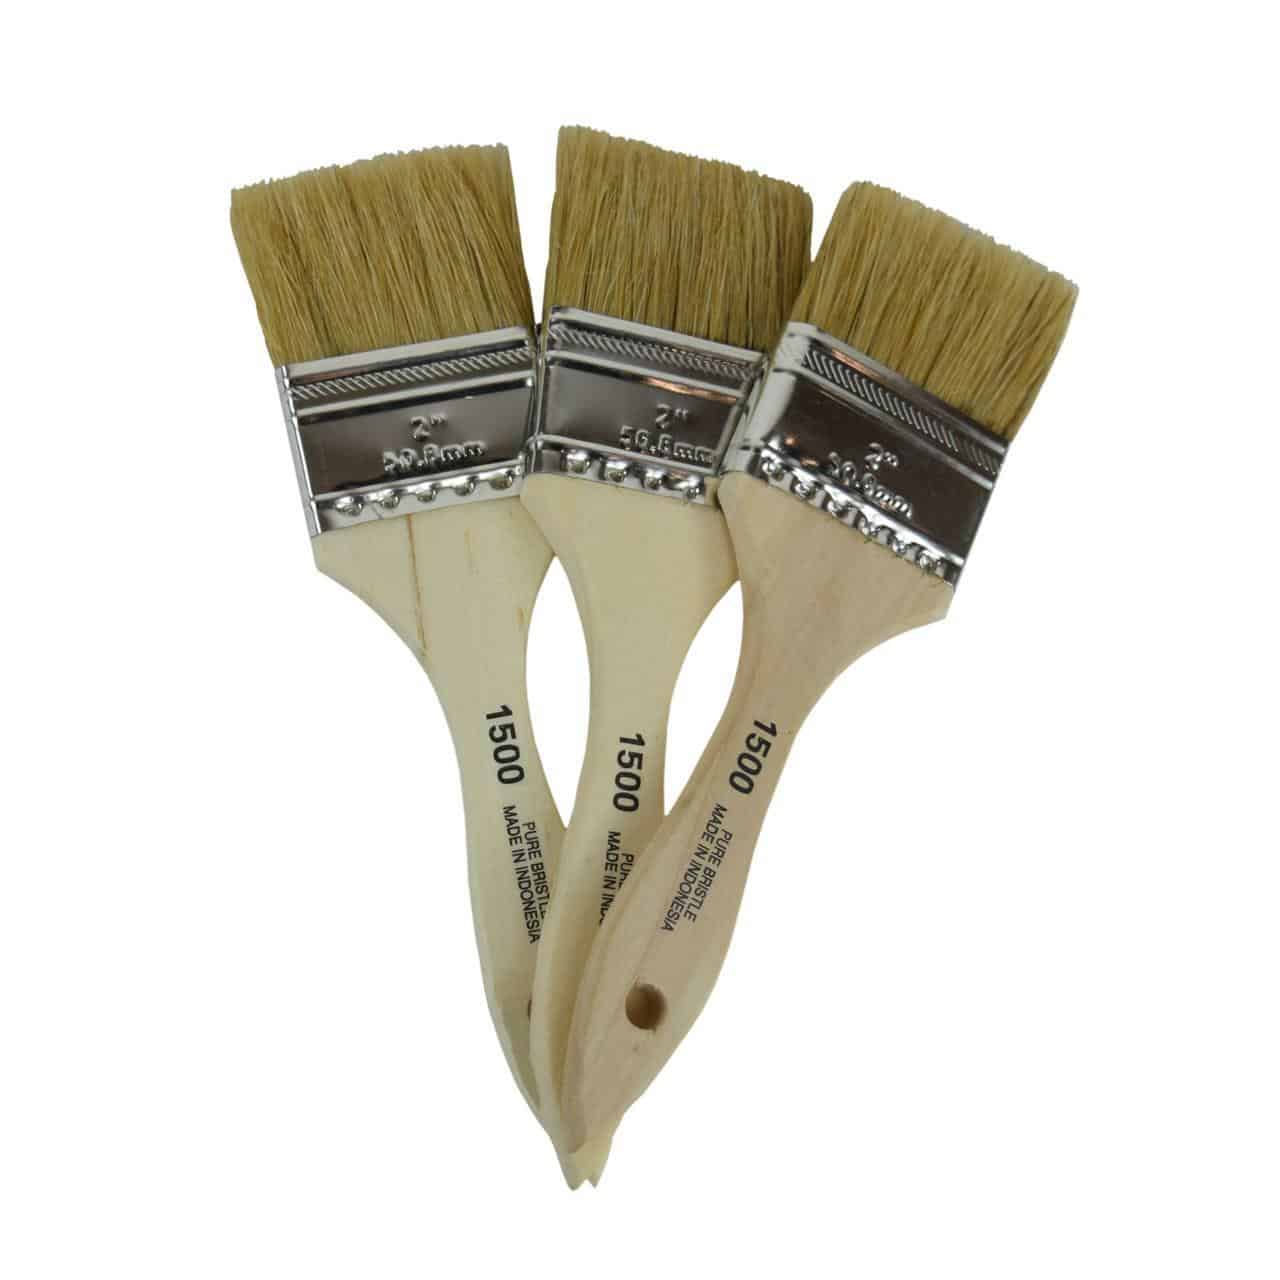 1 inch Natural Bristle Paint Brush Chip Brush, from Brush Man Inc.